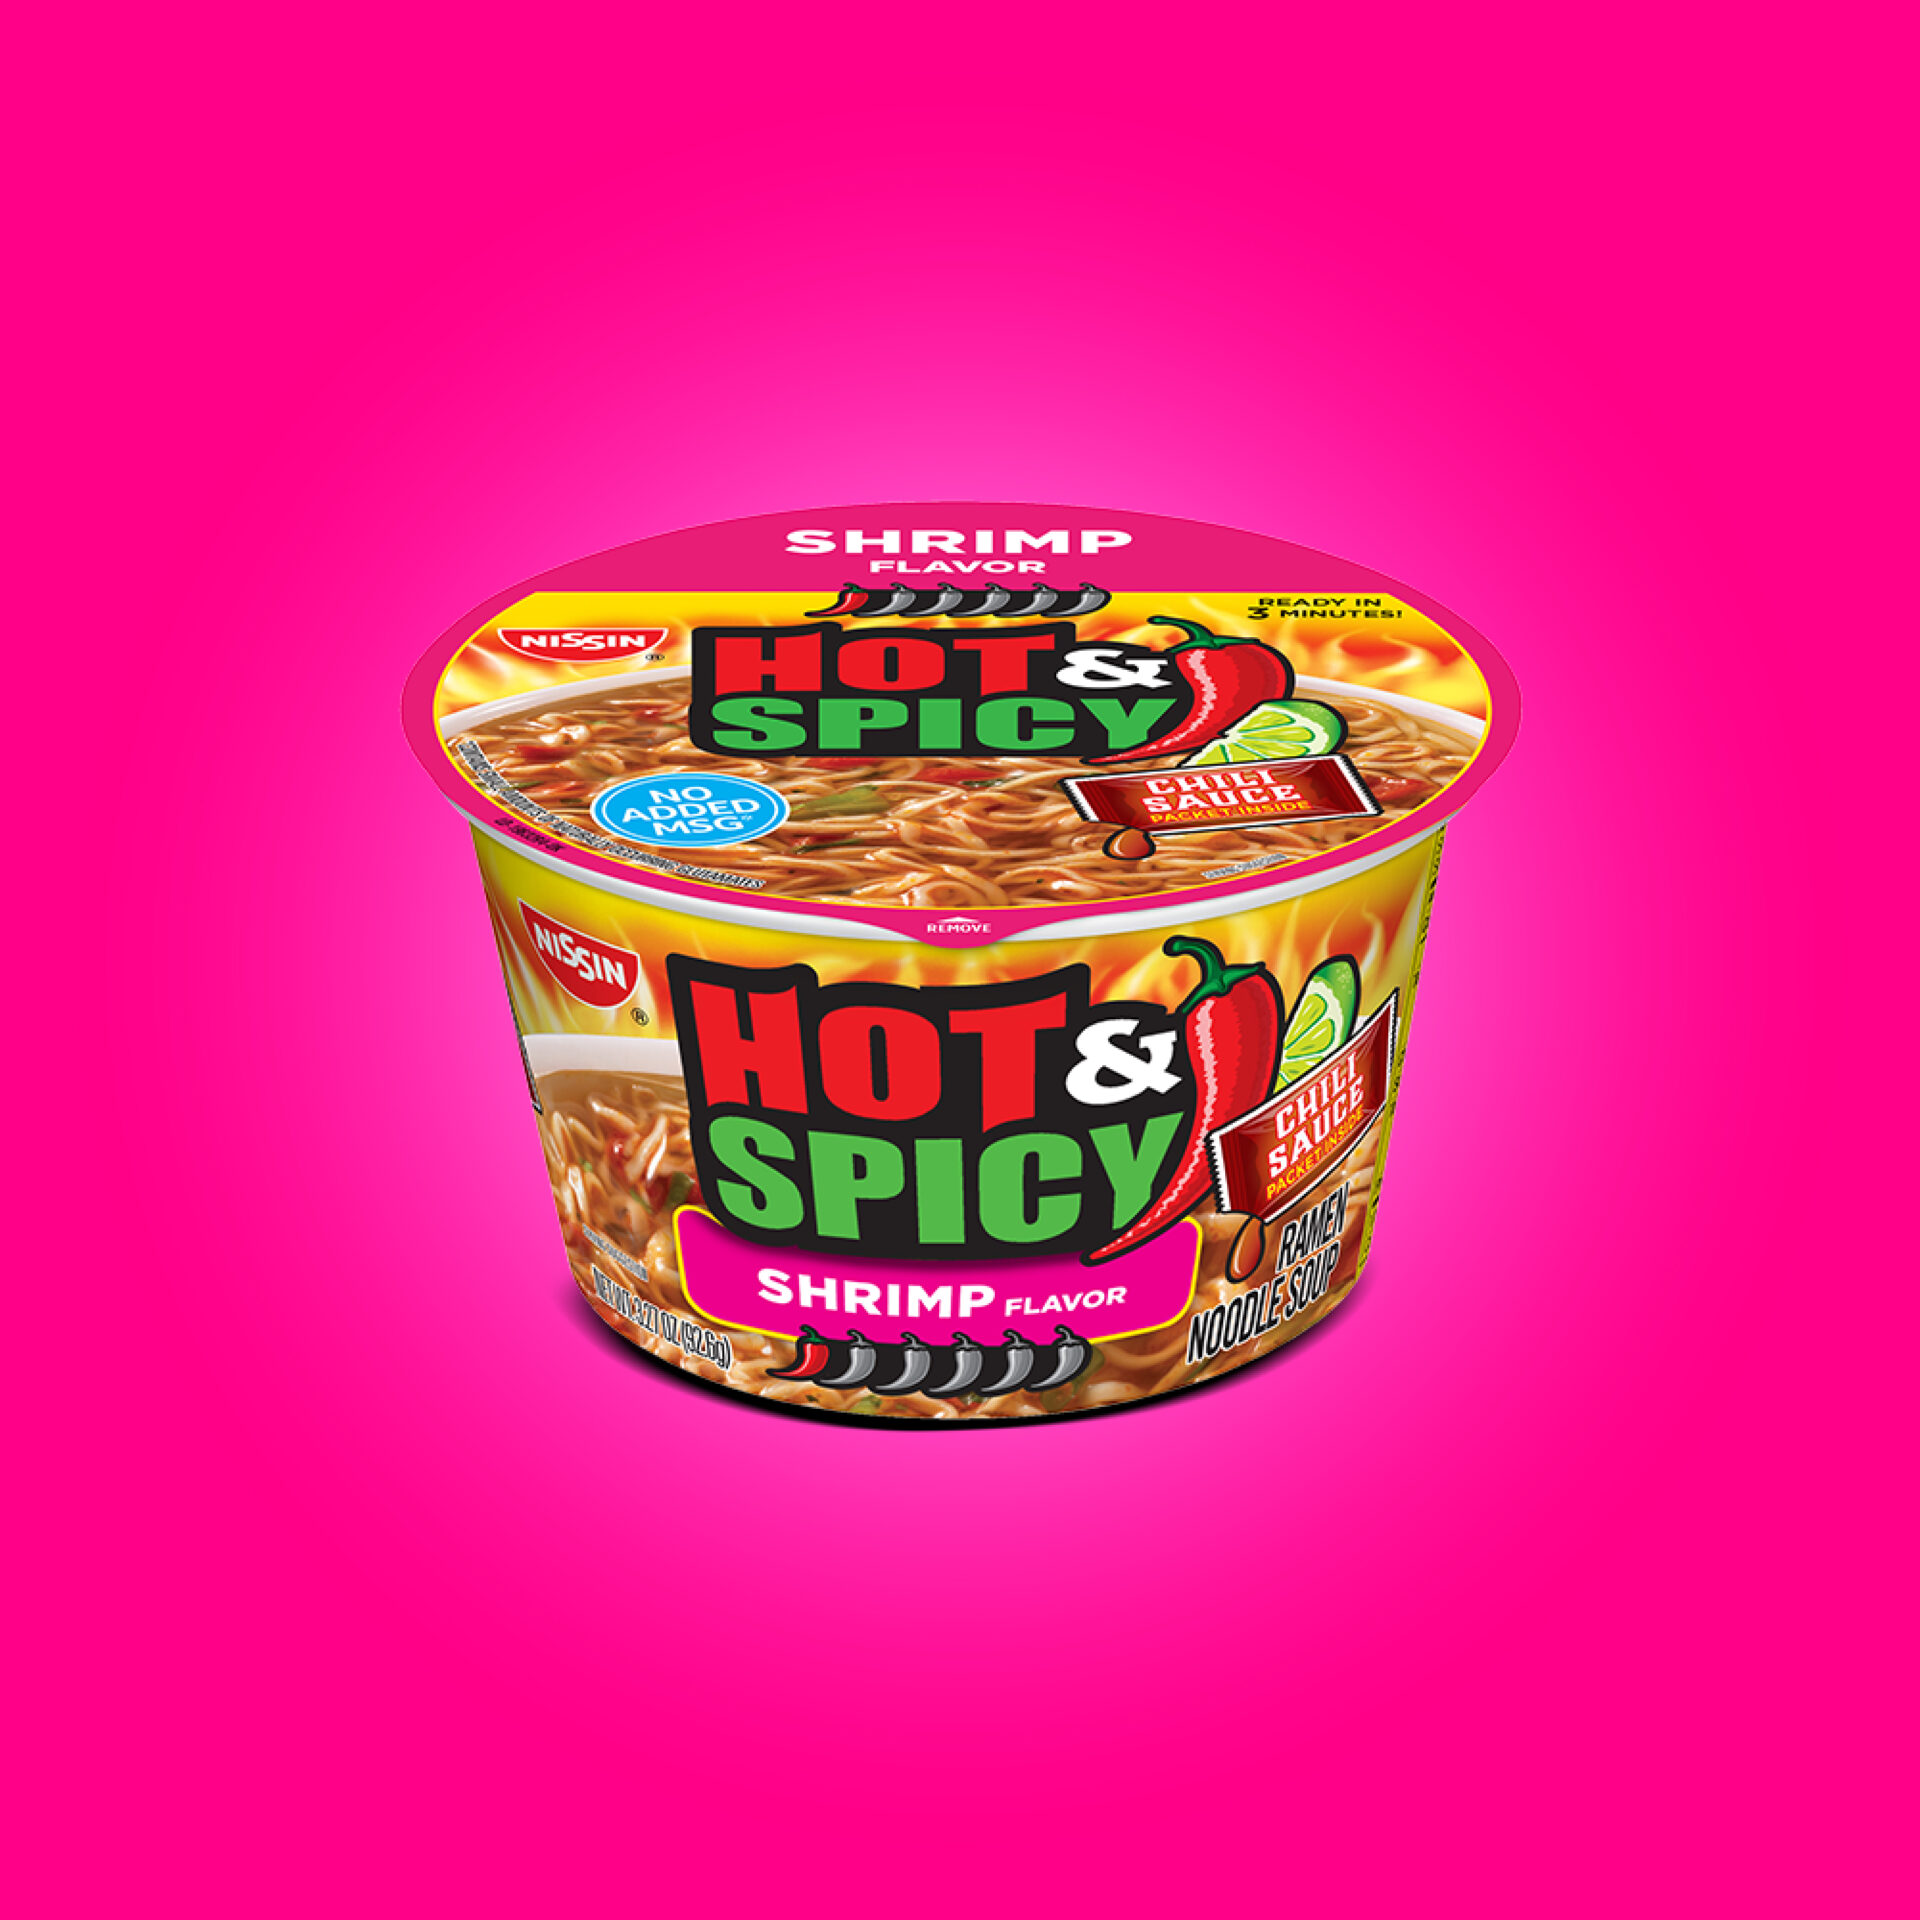 Hot & Spicy Shrimp - Nissin Food